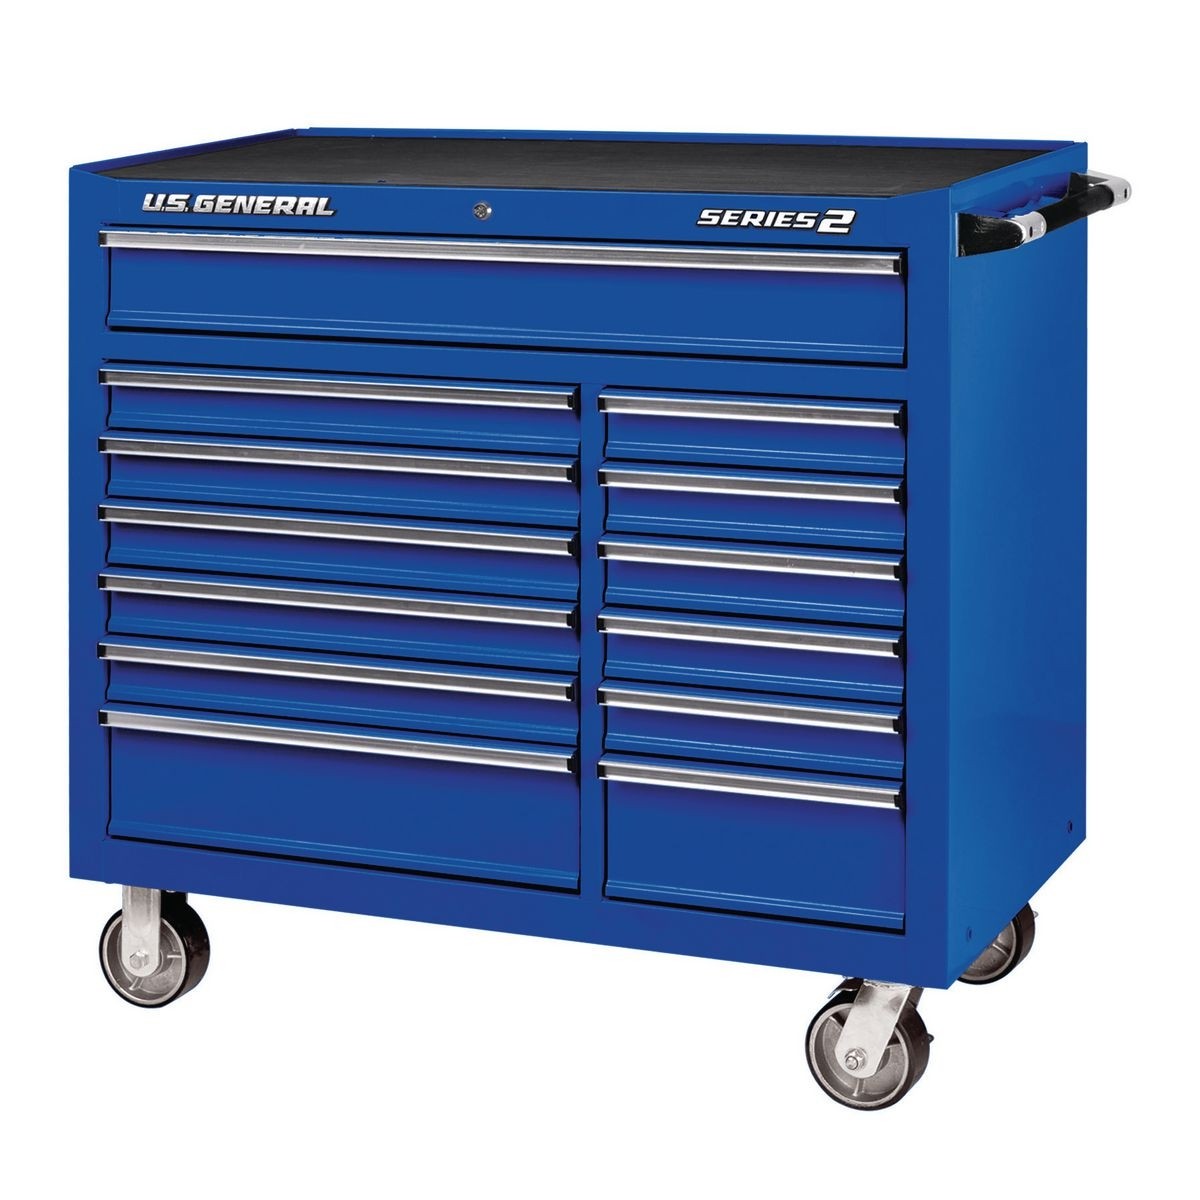 U.S. GENERAL 44 In. X 22 In. Double Bank Roller Cabinet – Blue – Item 64446 / 64444 / 64445